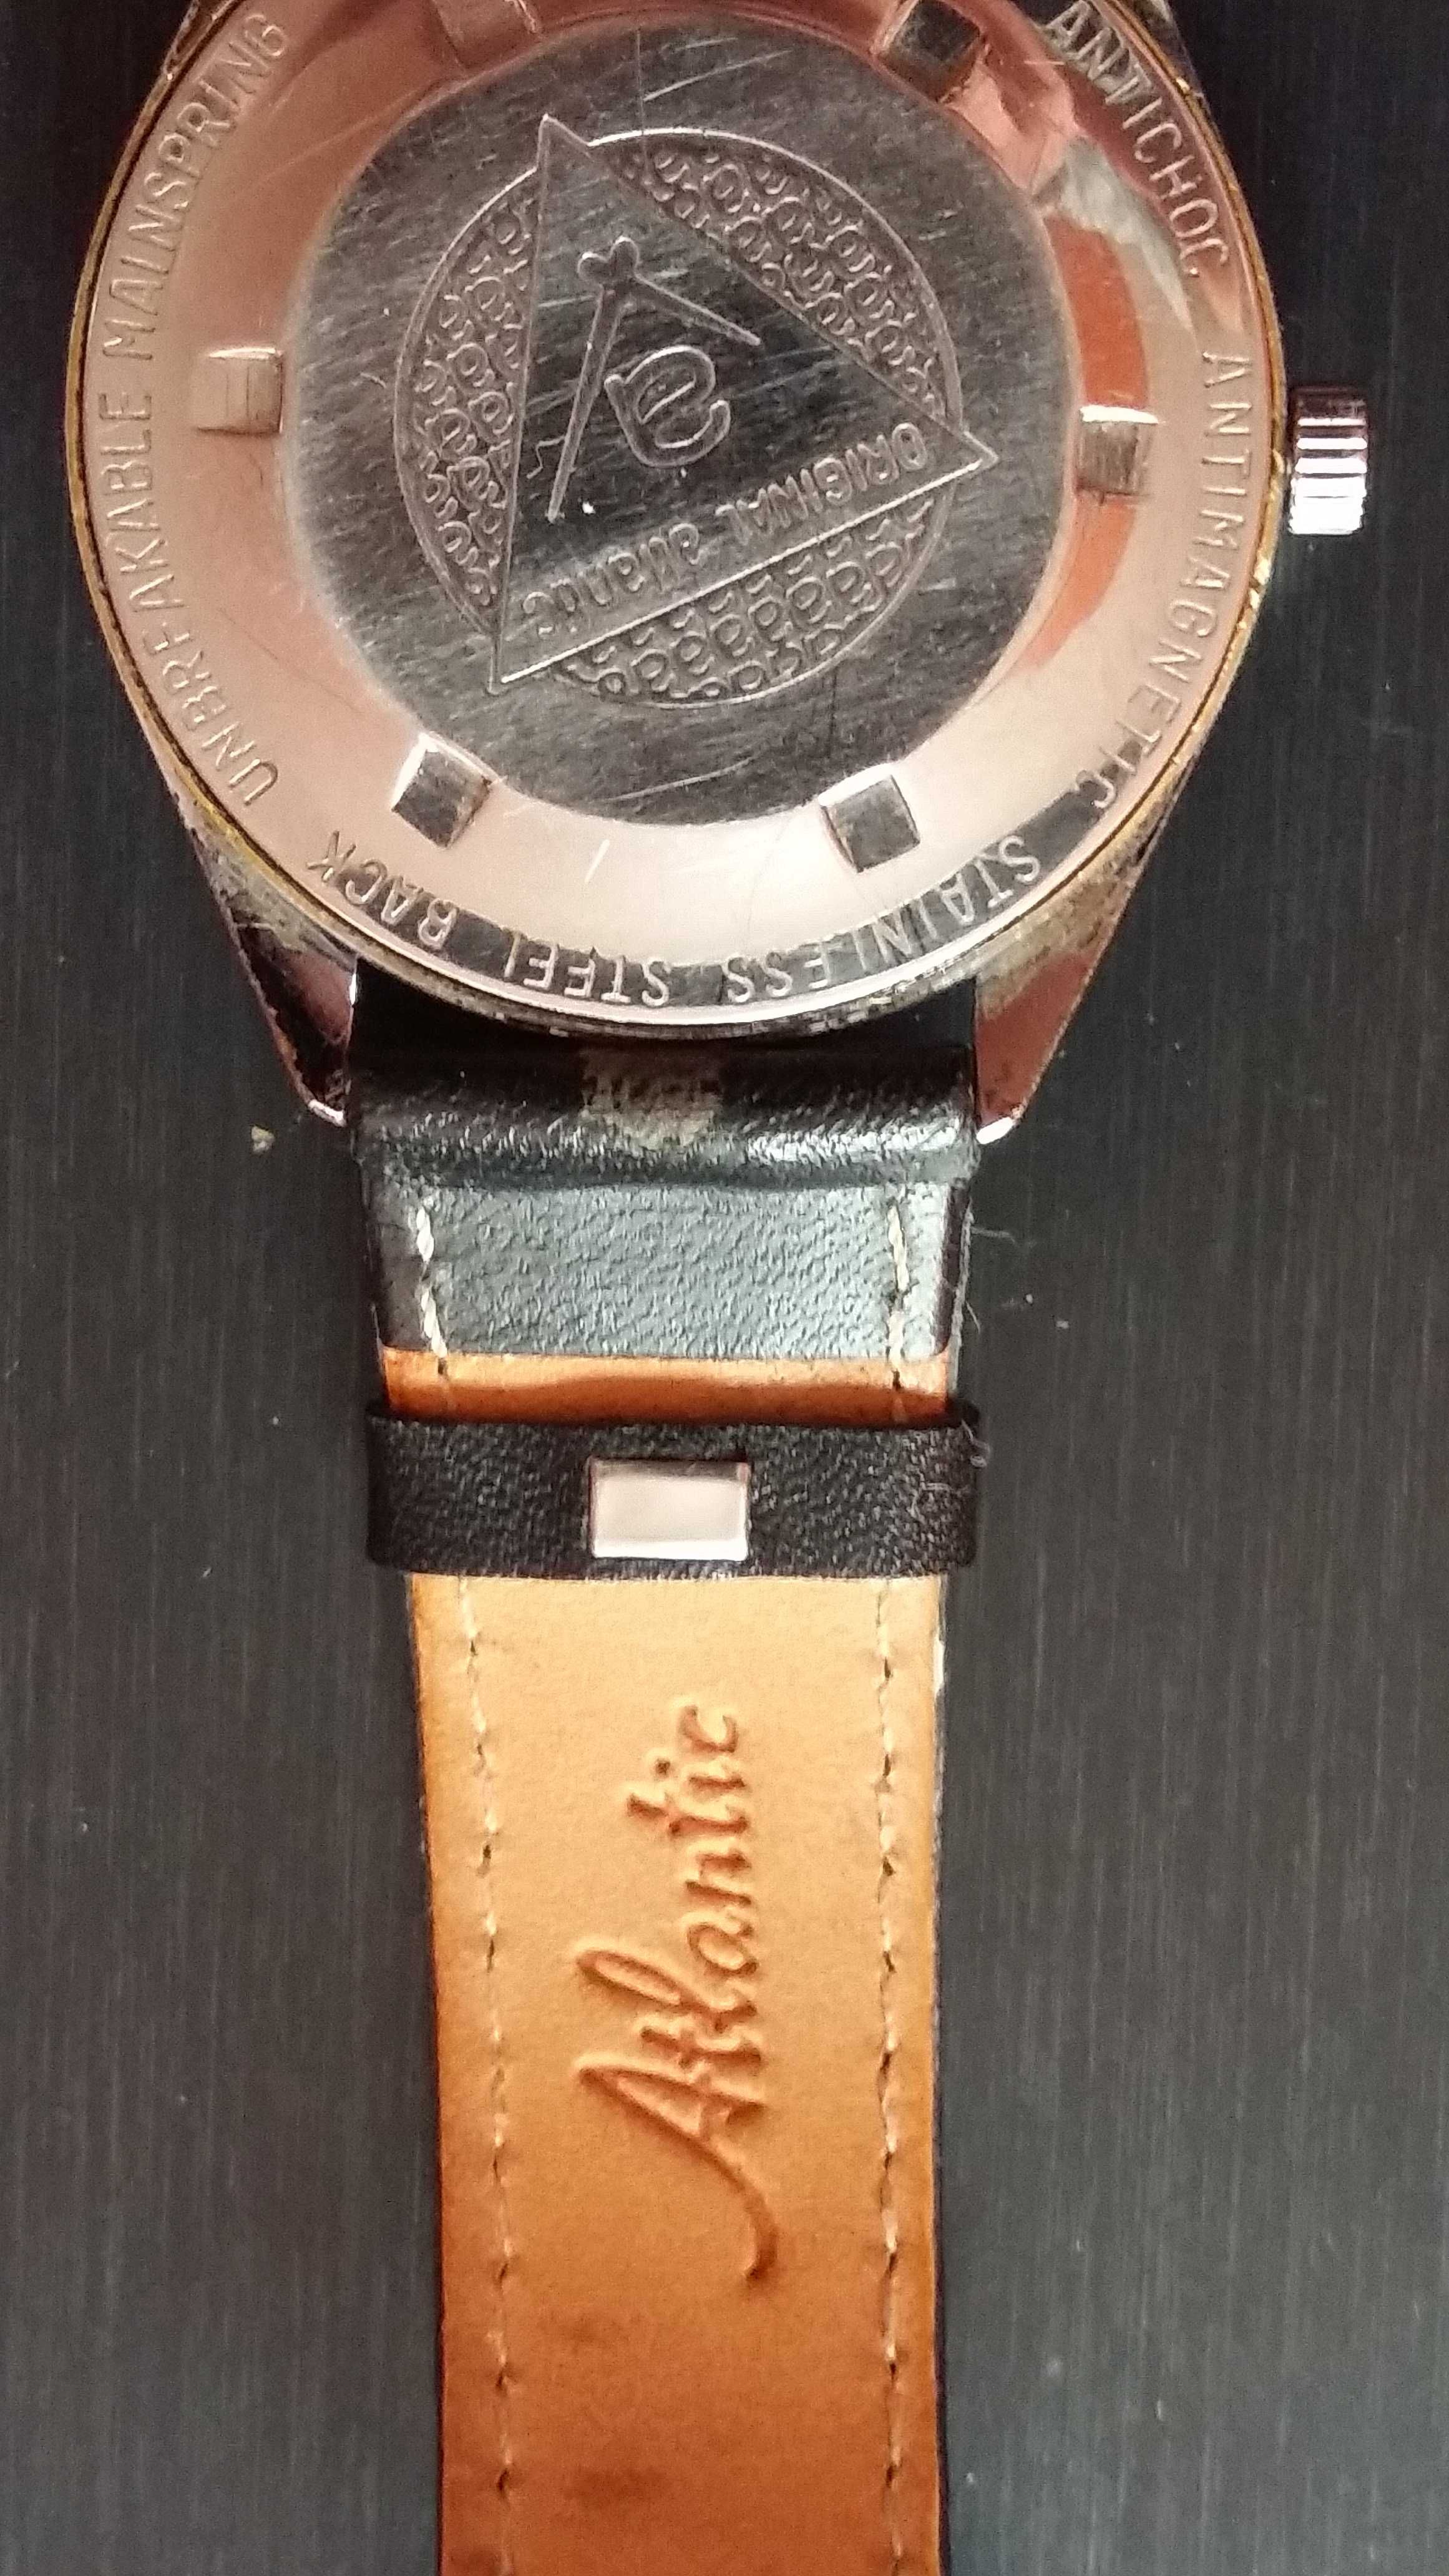 Atlantic Original po serwisie zegarek męski